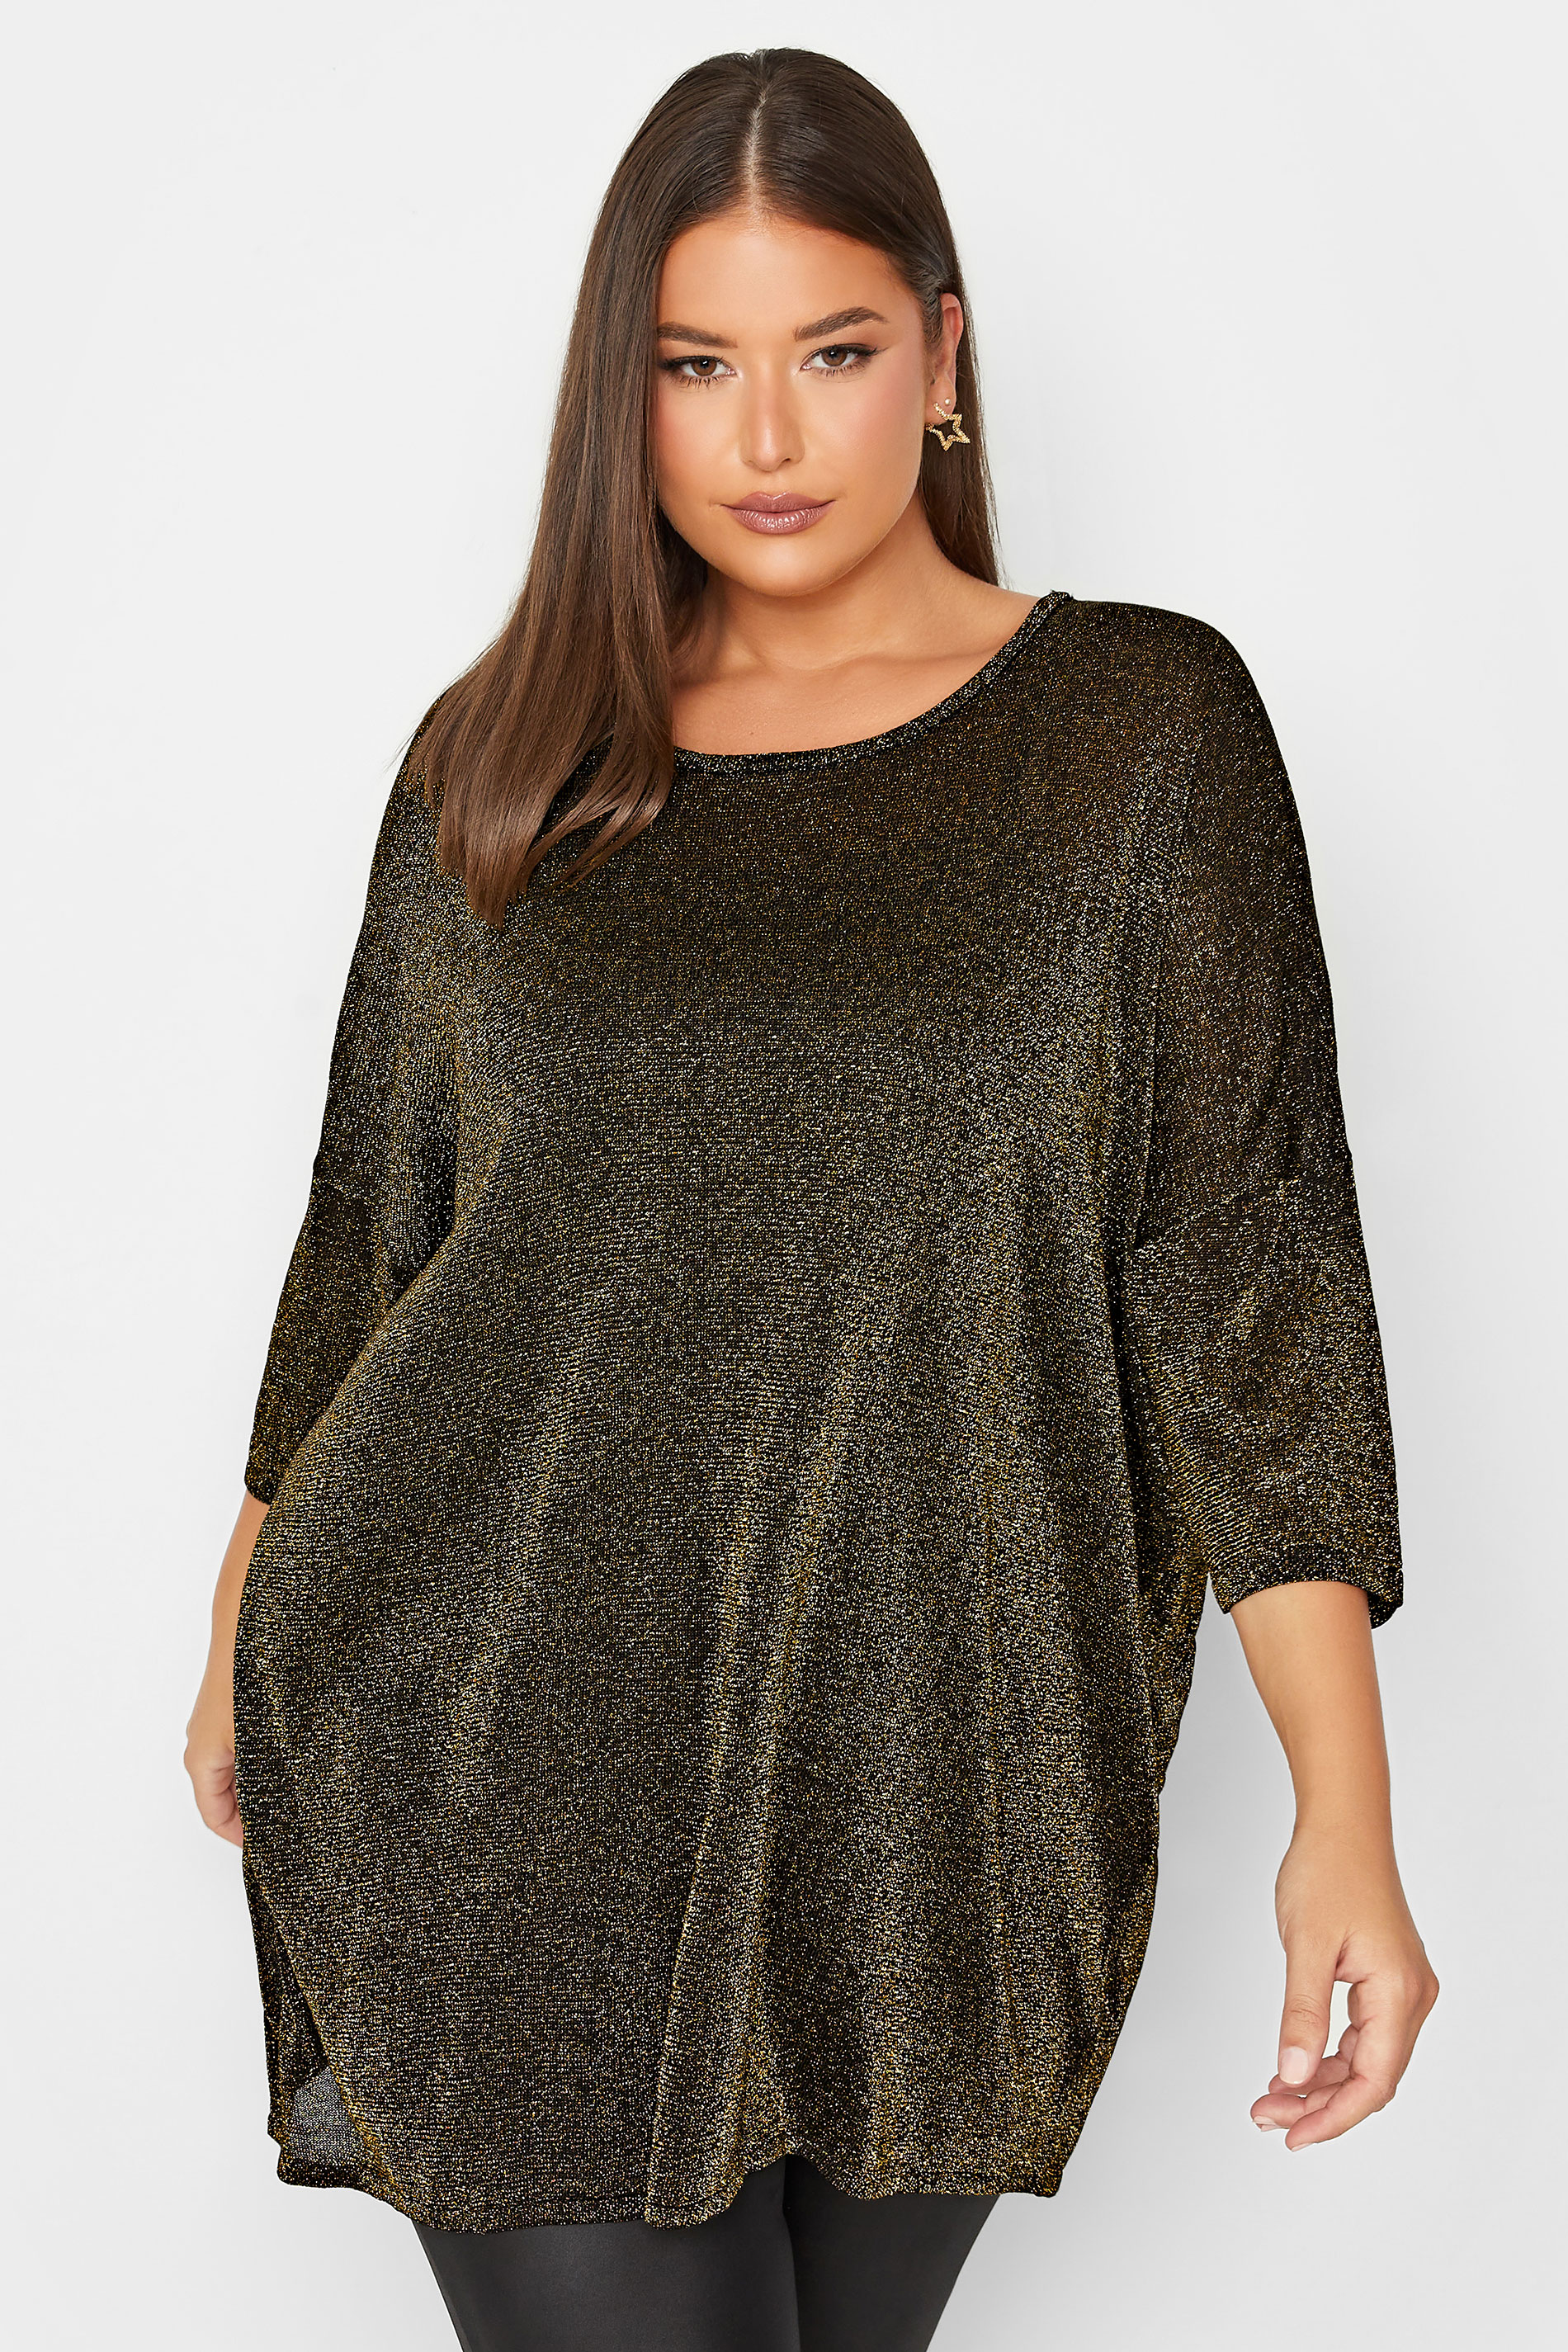 Curve Gold & Black Glitter Drop Shoulder Top | Yours Clothing 1